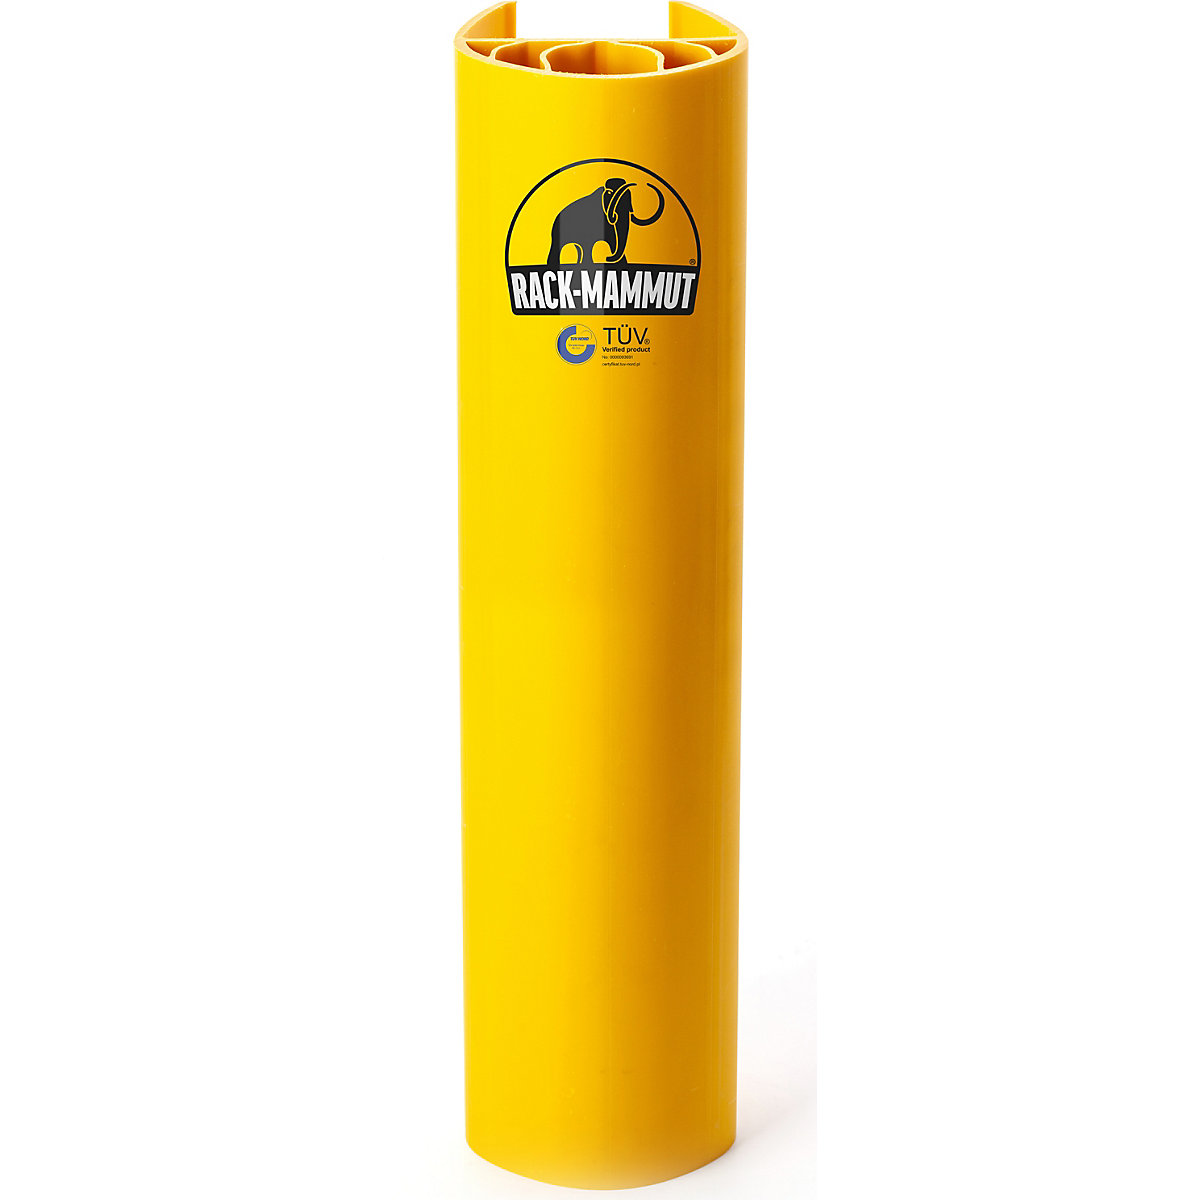 Proteção contra impactos na estante Rack-Mammut® – Ampere Rack Mammut